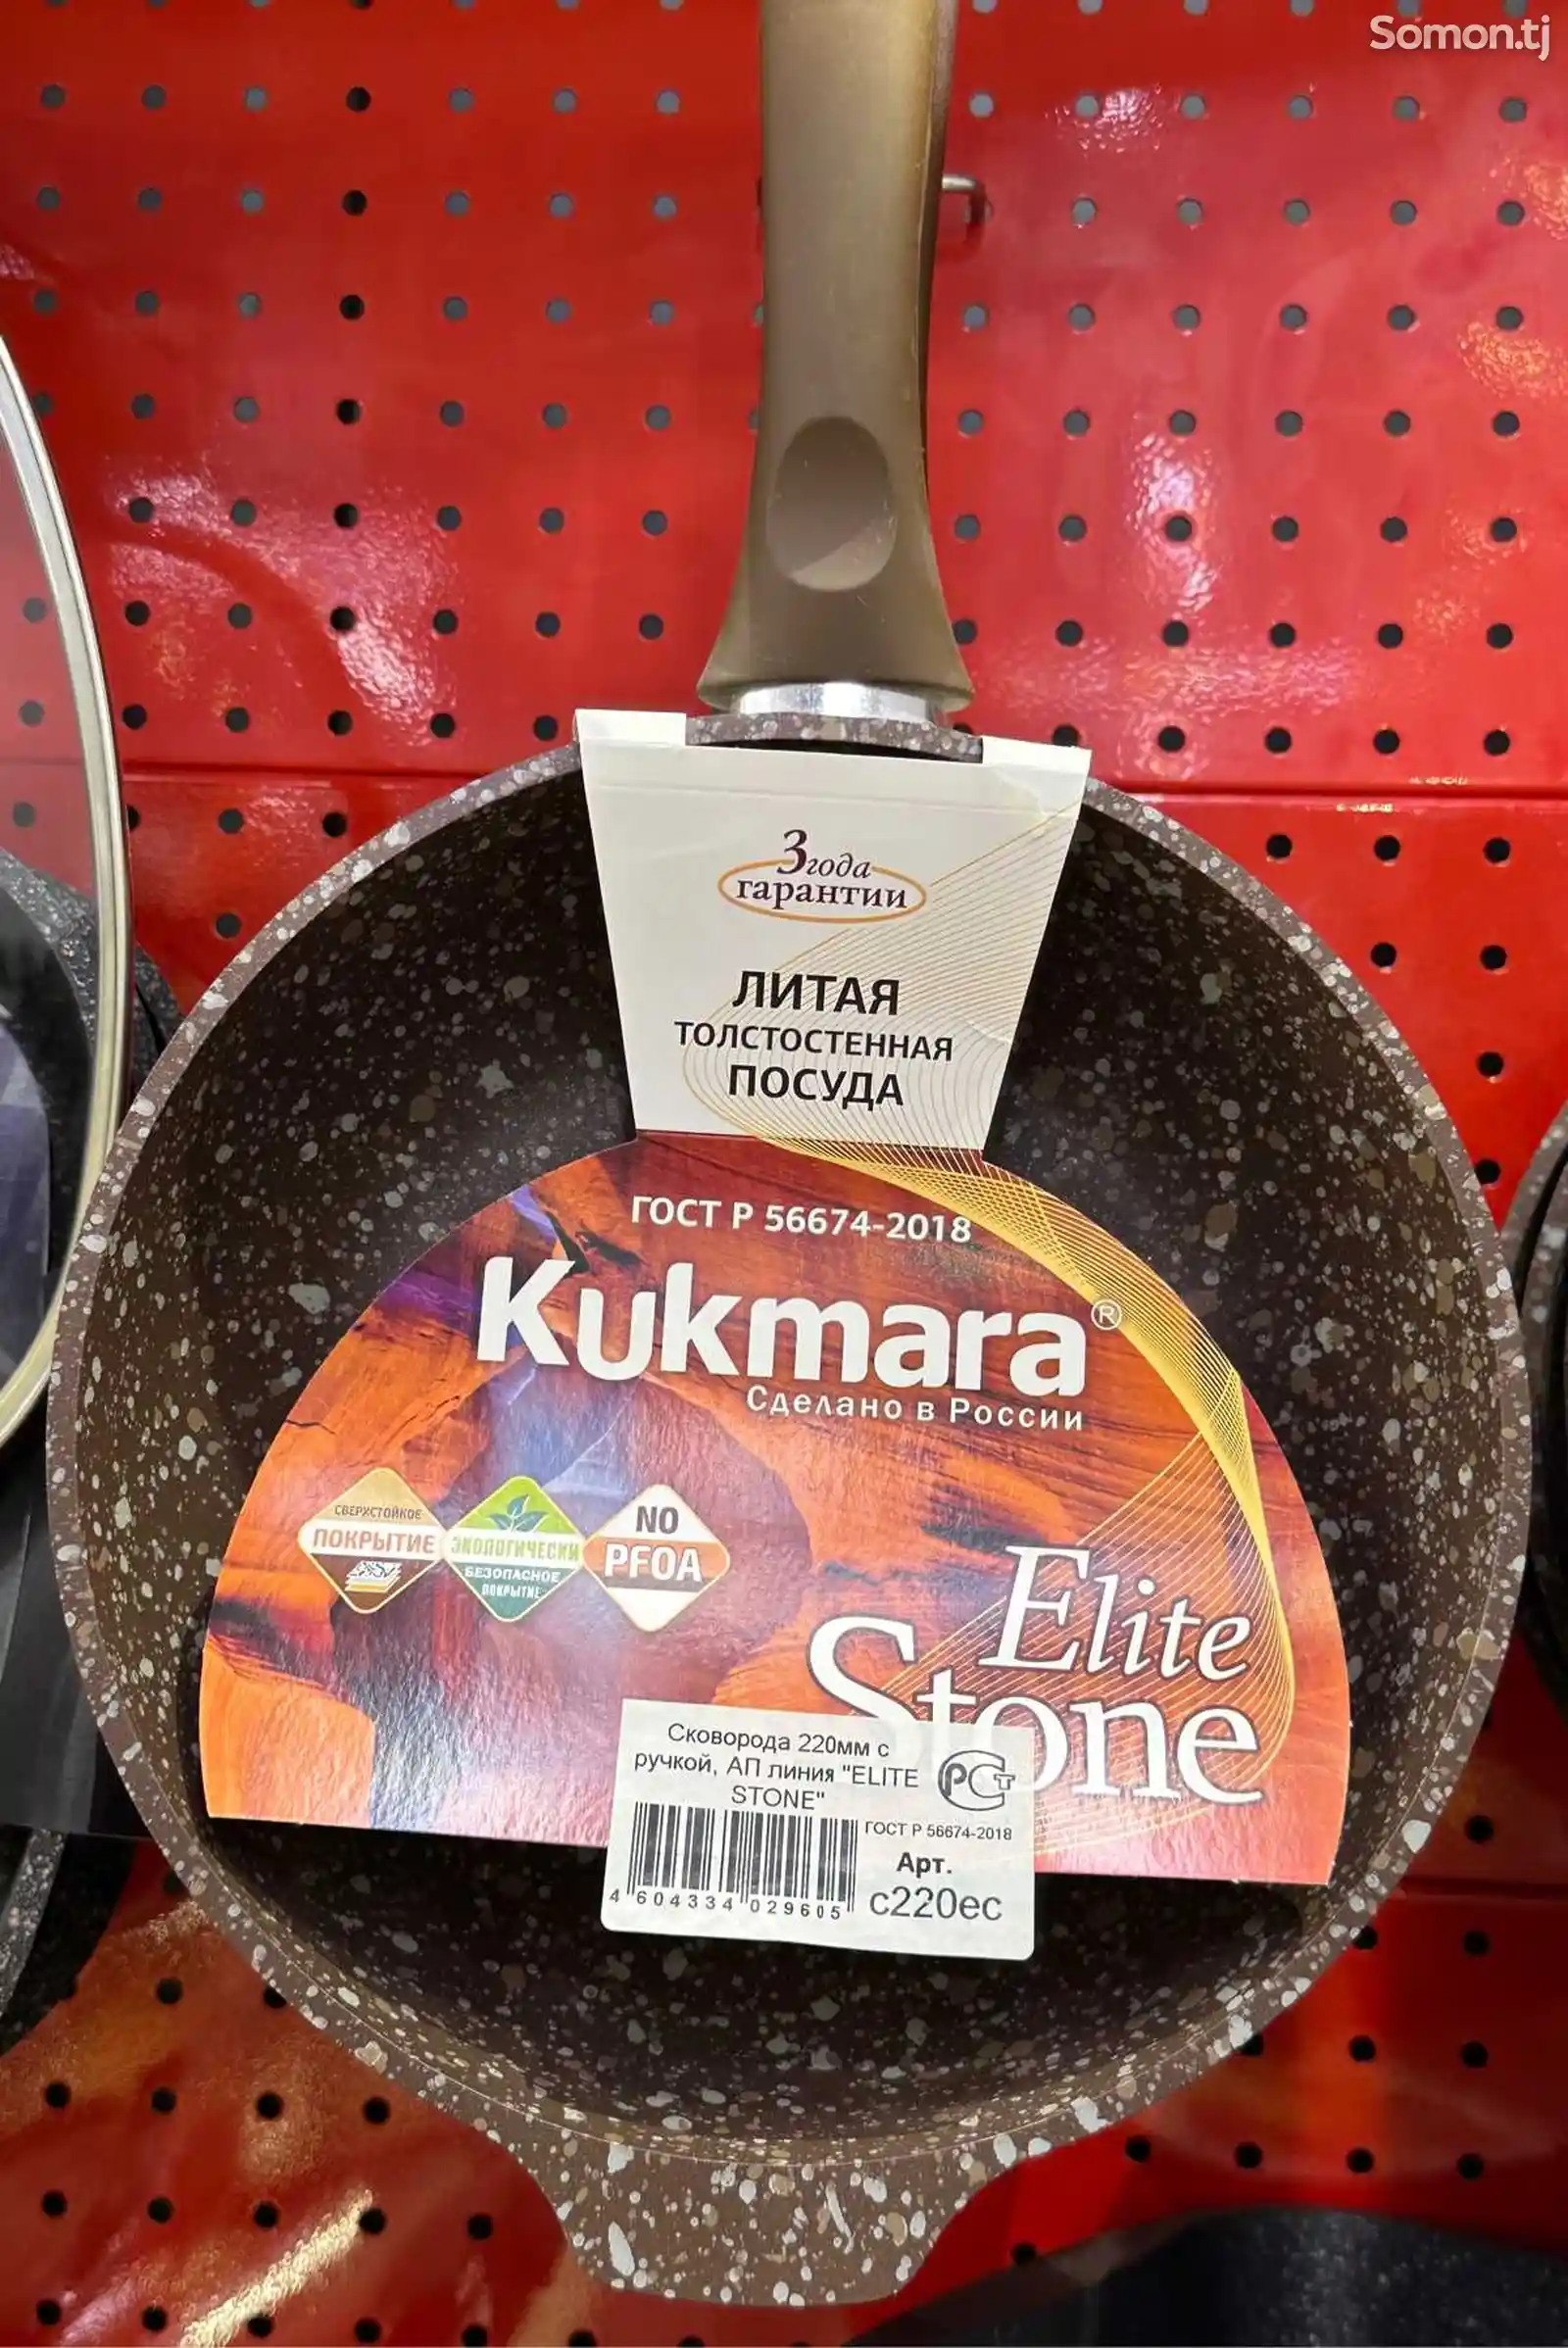 Сковородка Kukmara-1